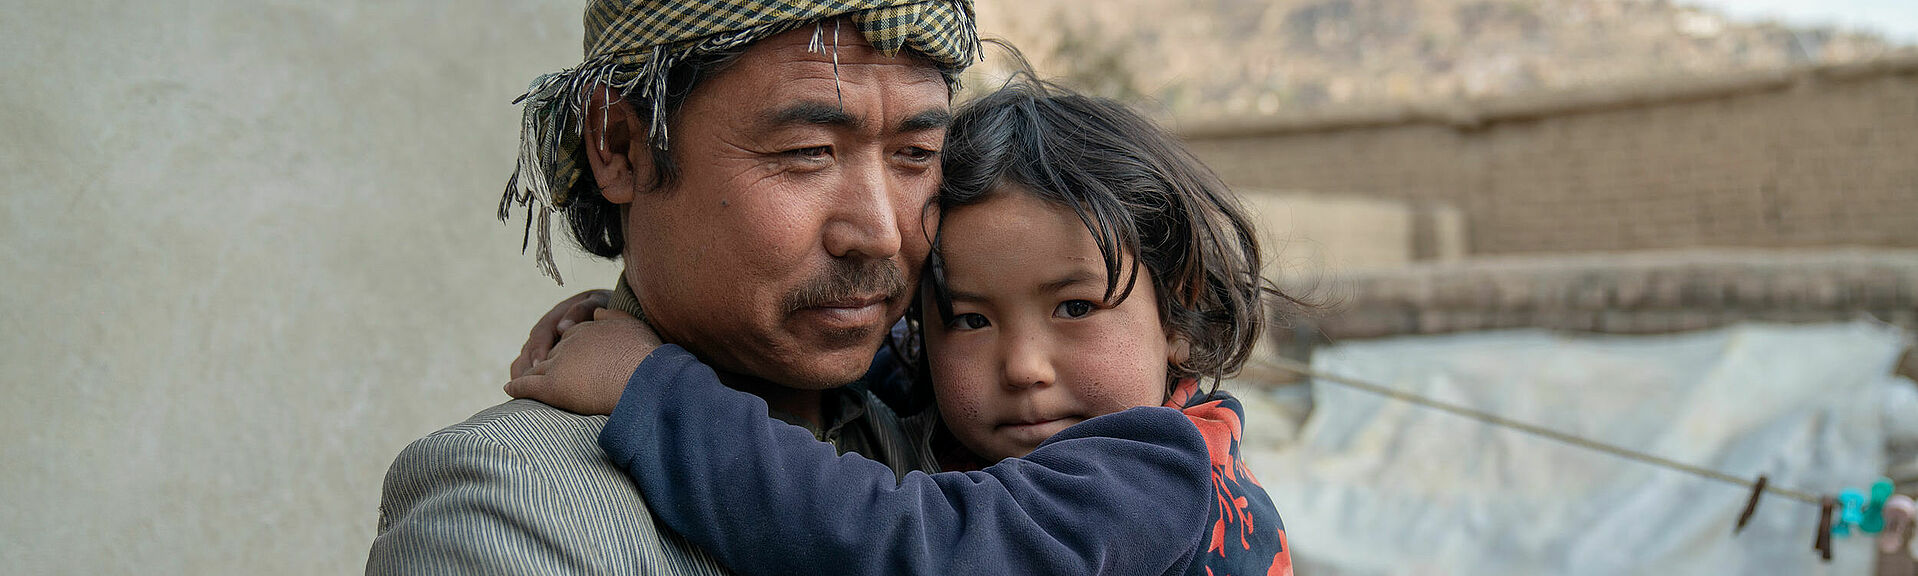 Vater mit Tochter in Afghanistan